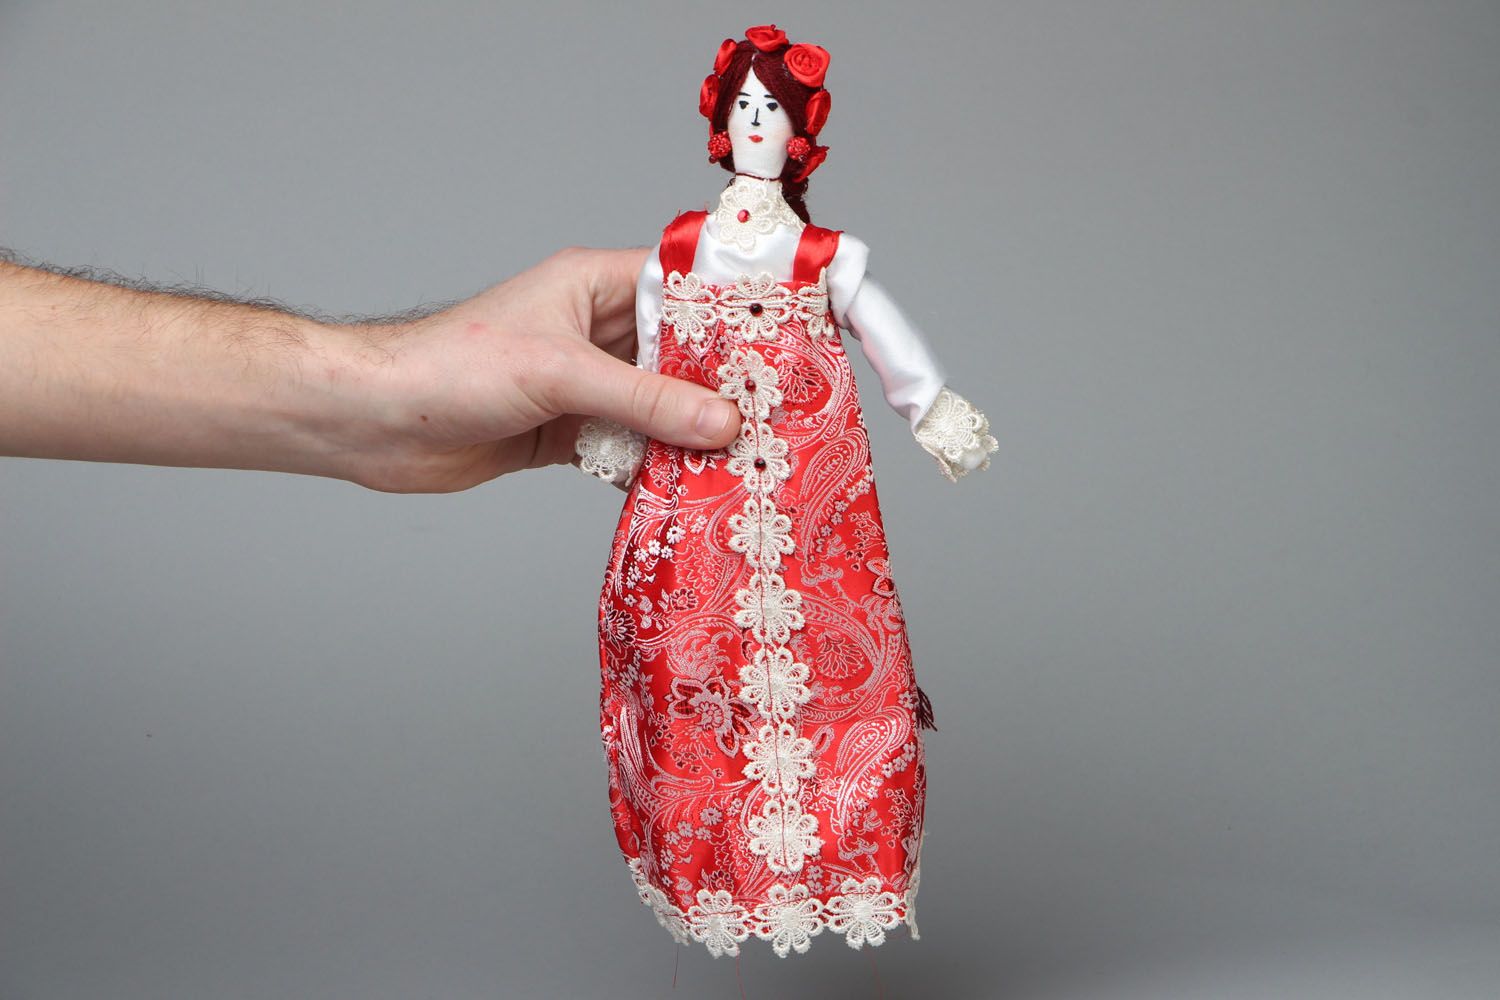 Handmade textile doll photo 4